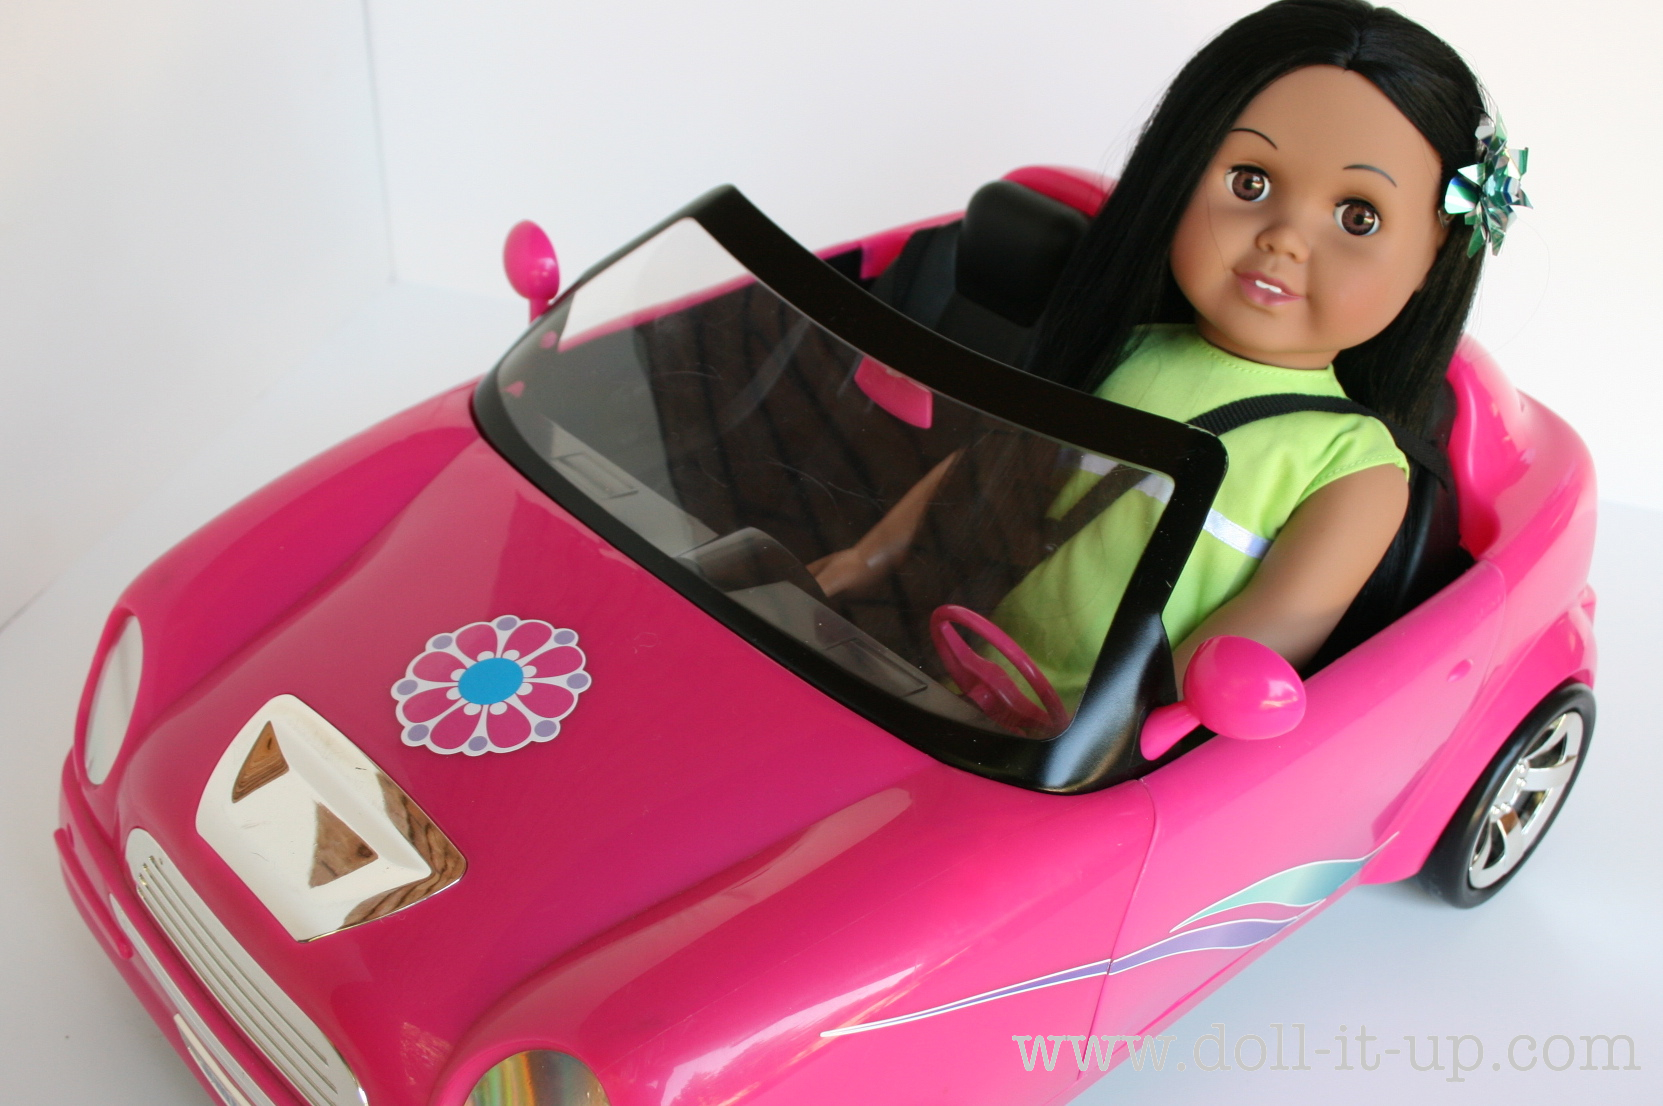 american girl doll cars